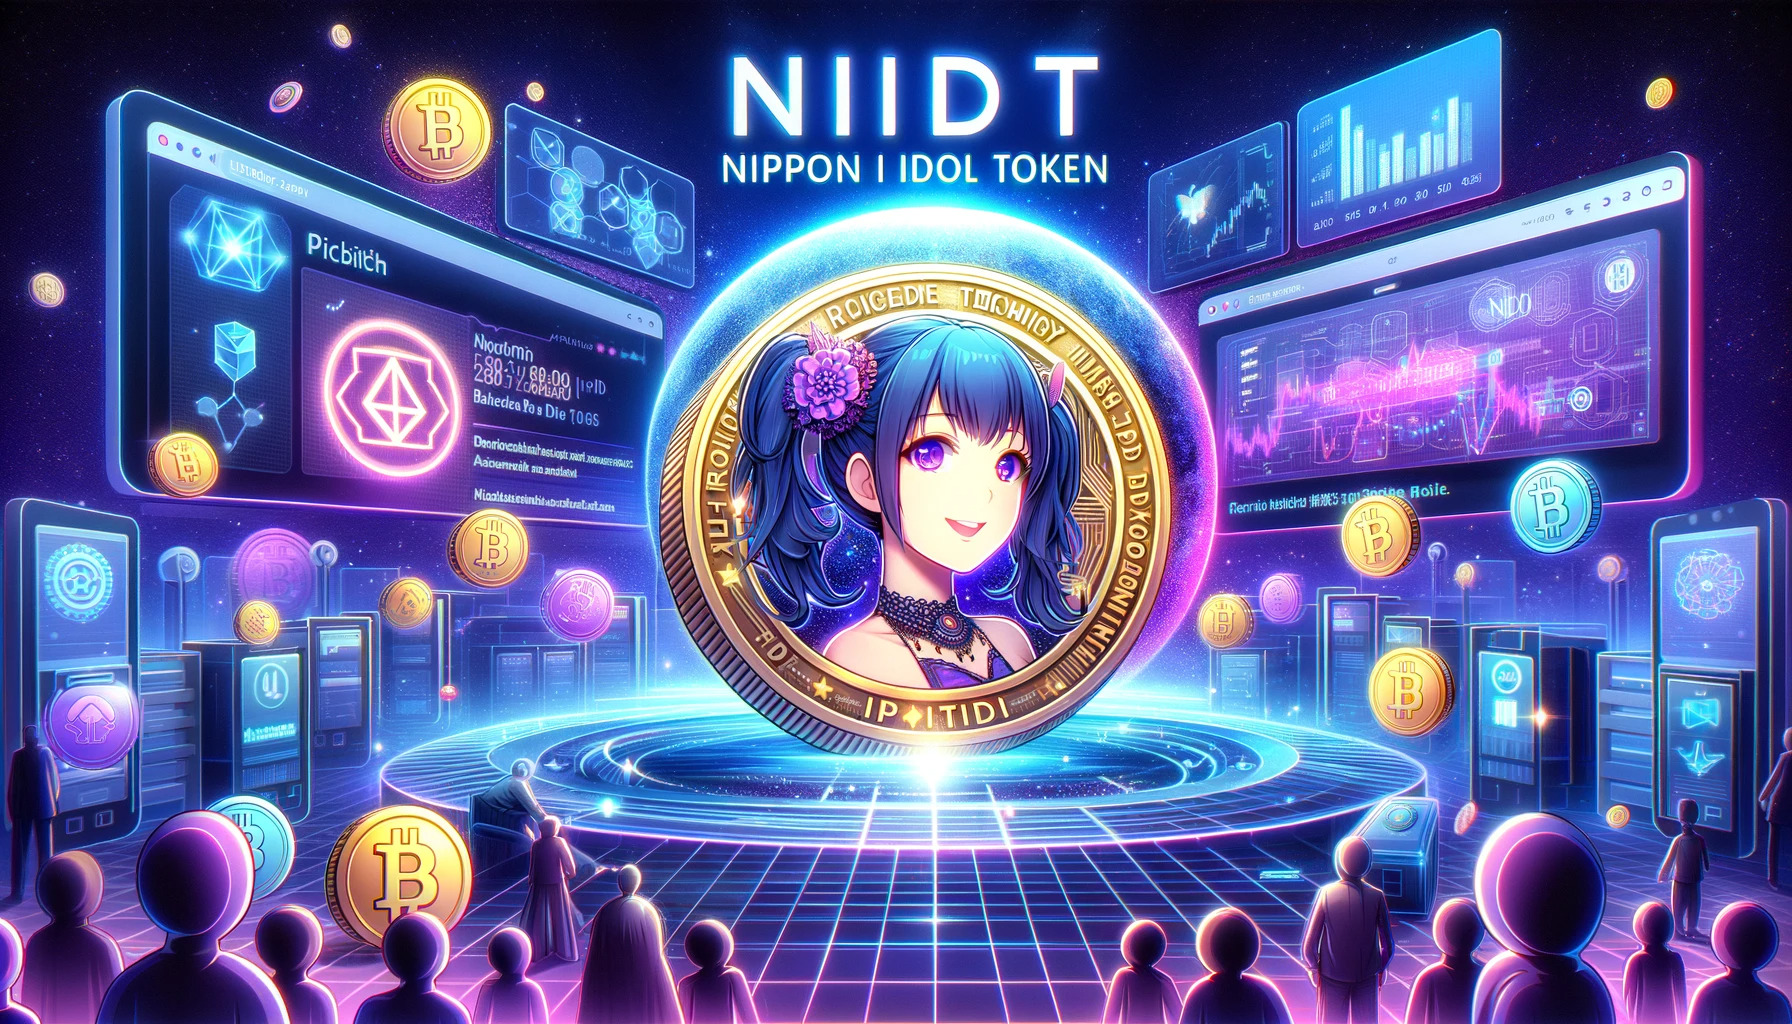 NIDT(Nippon Idol Token)とは？特徴・メリットや購入できる取引所についても